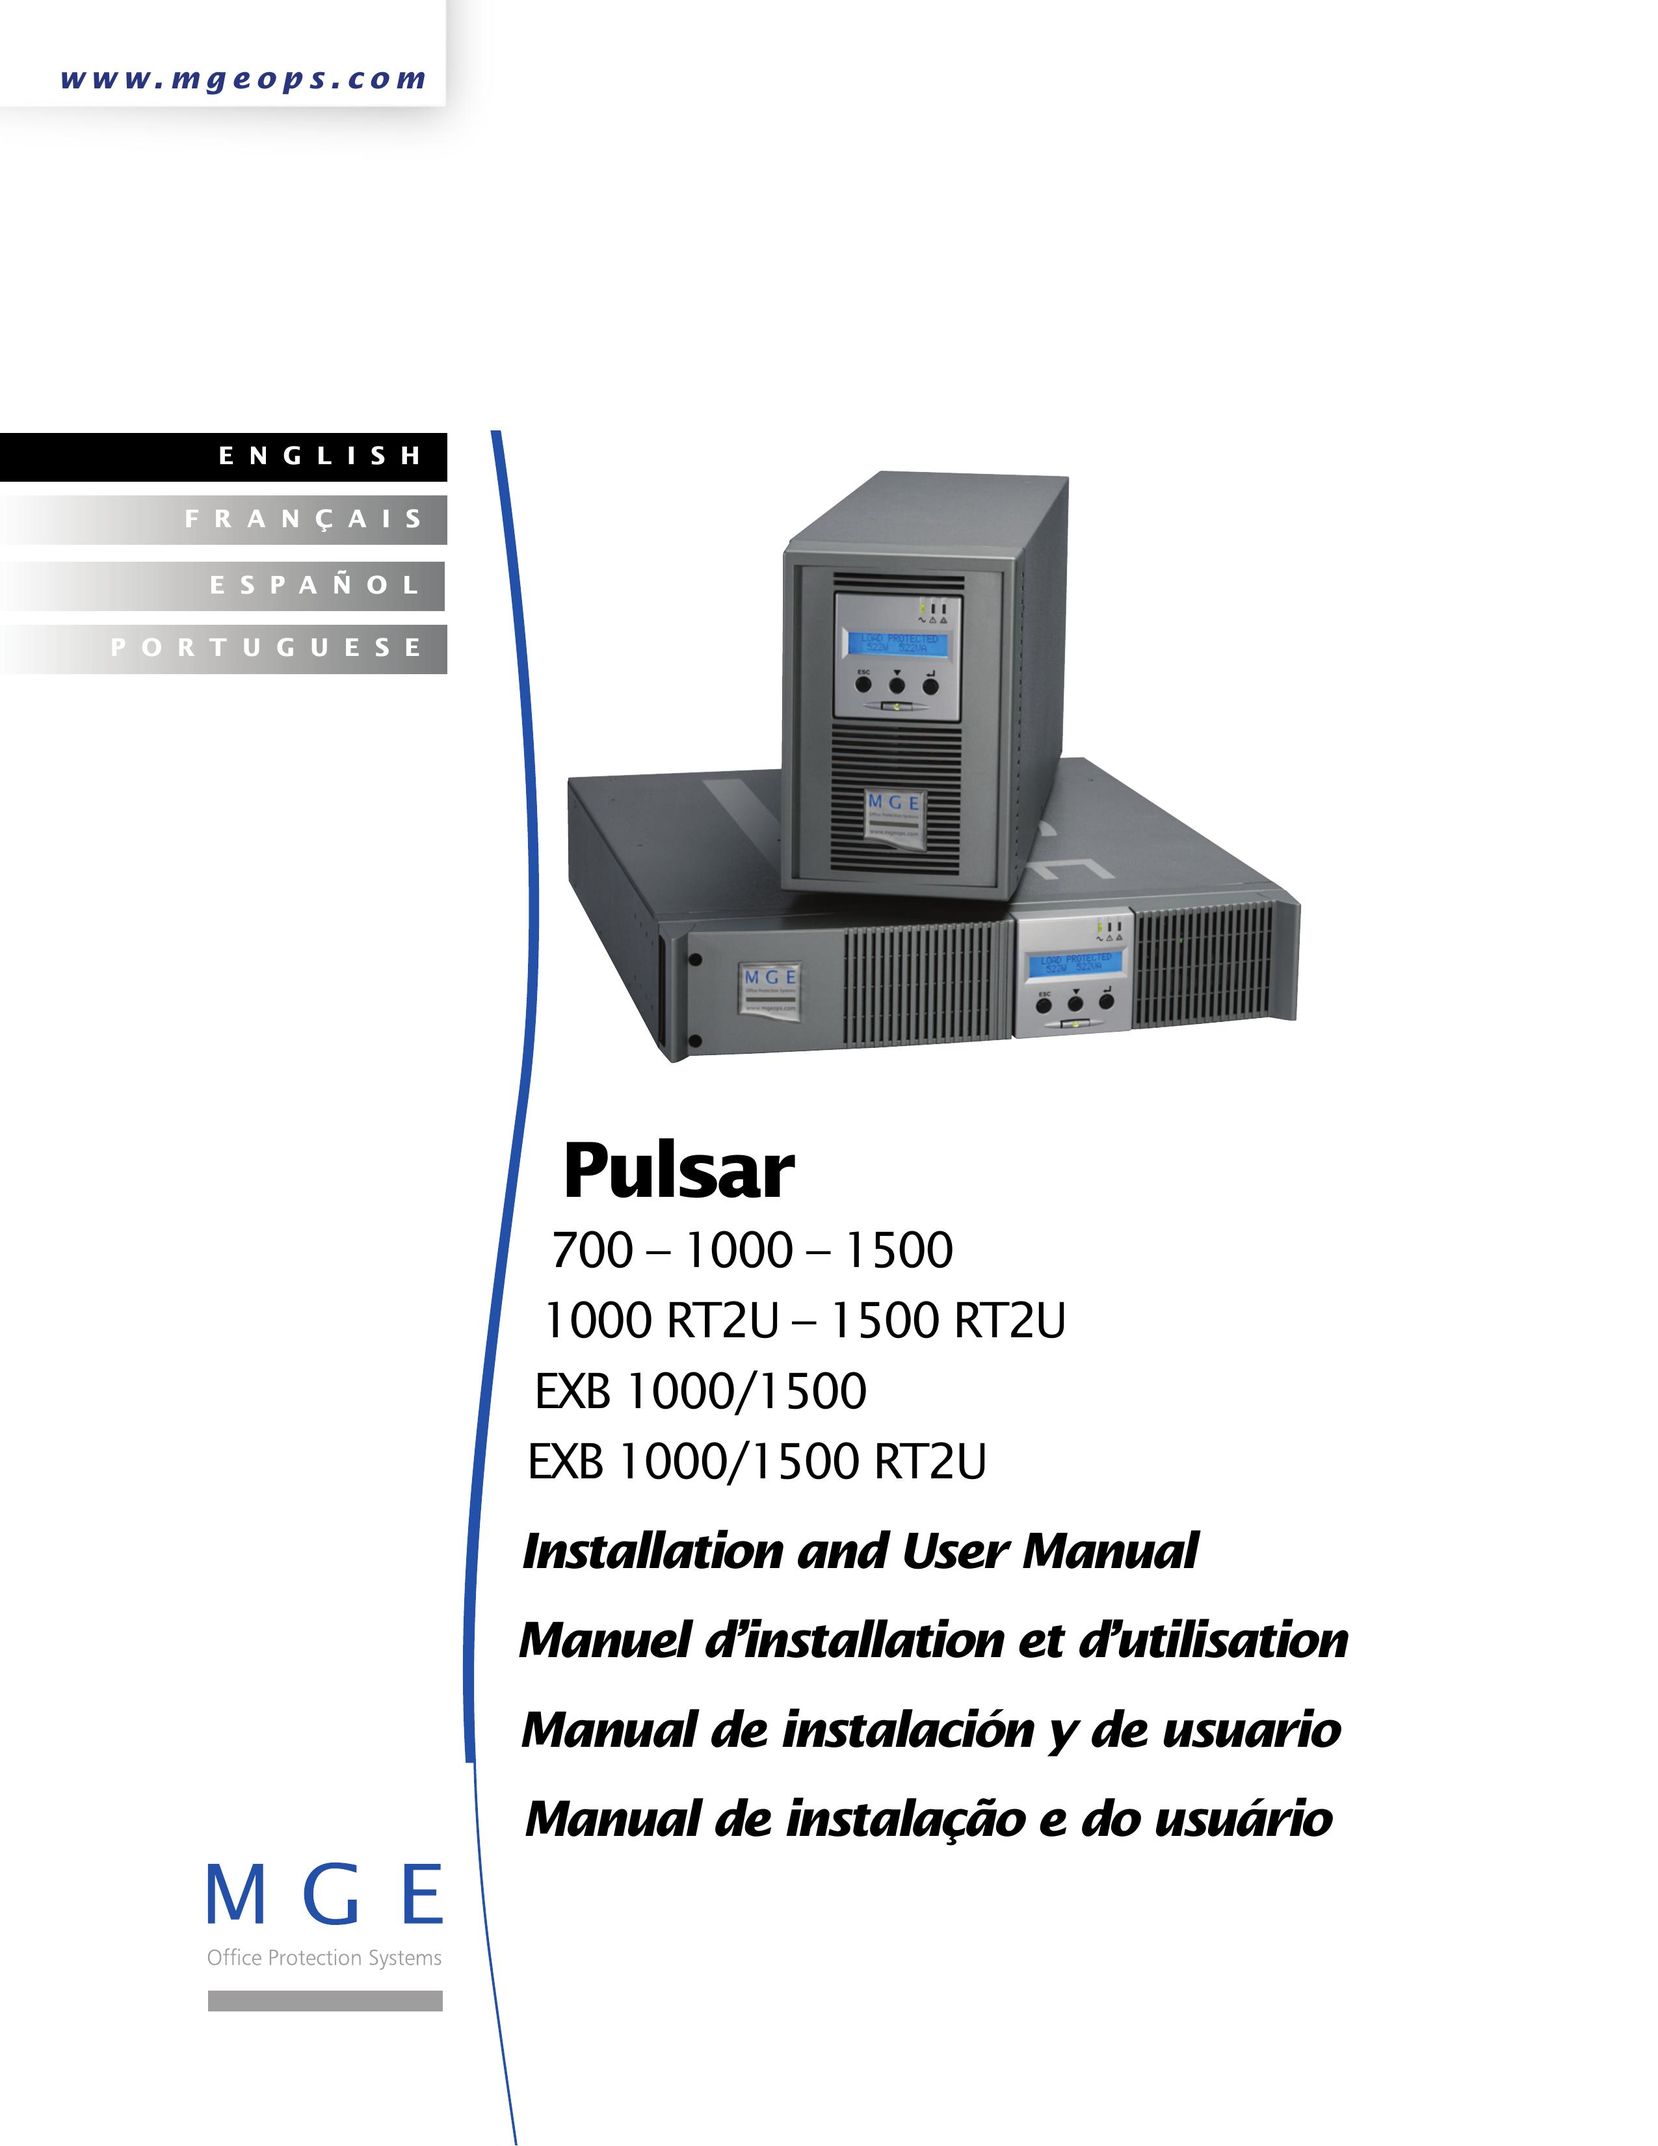 MGE UPS Systems 1000 RT2U Power Supply User Manual